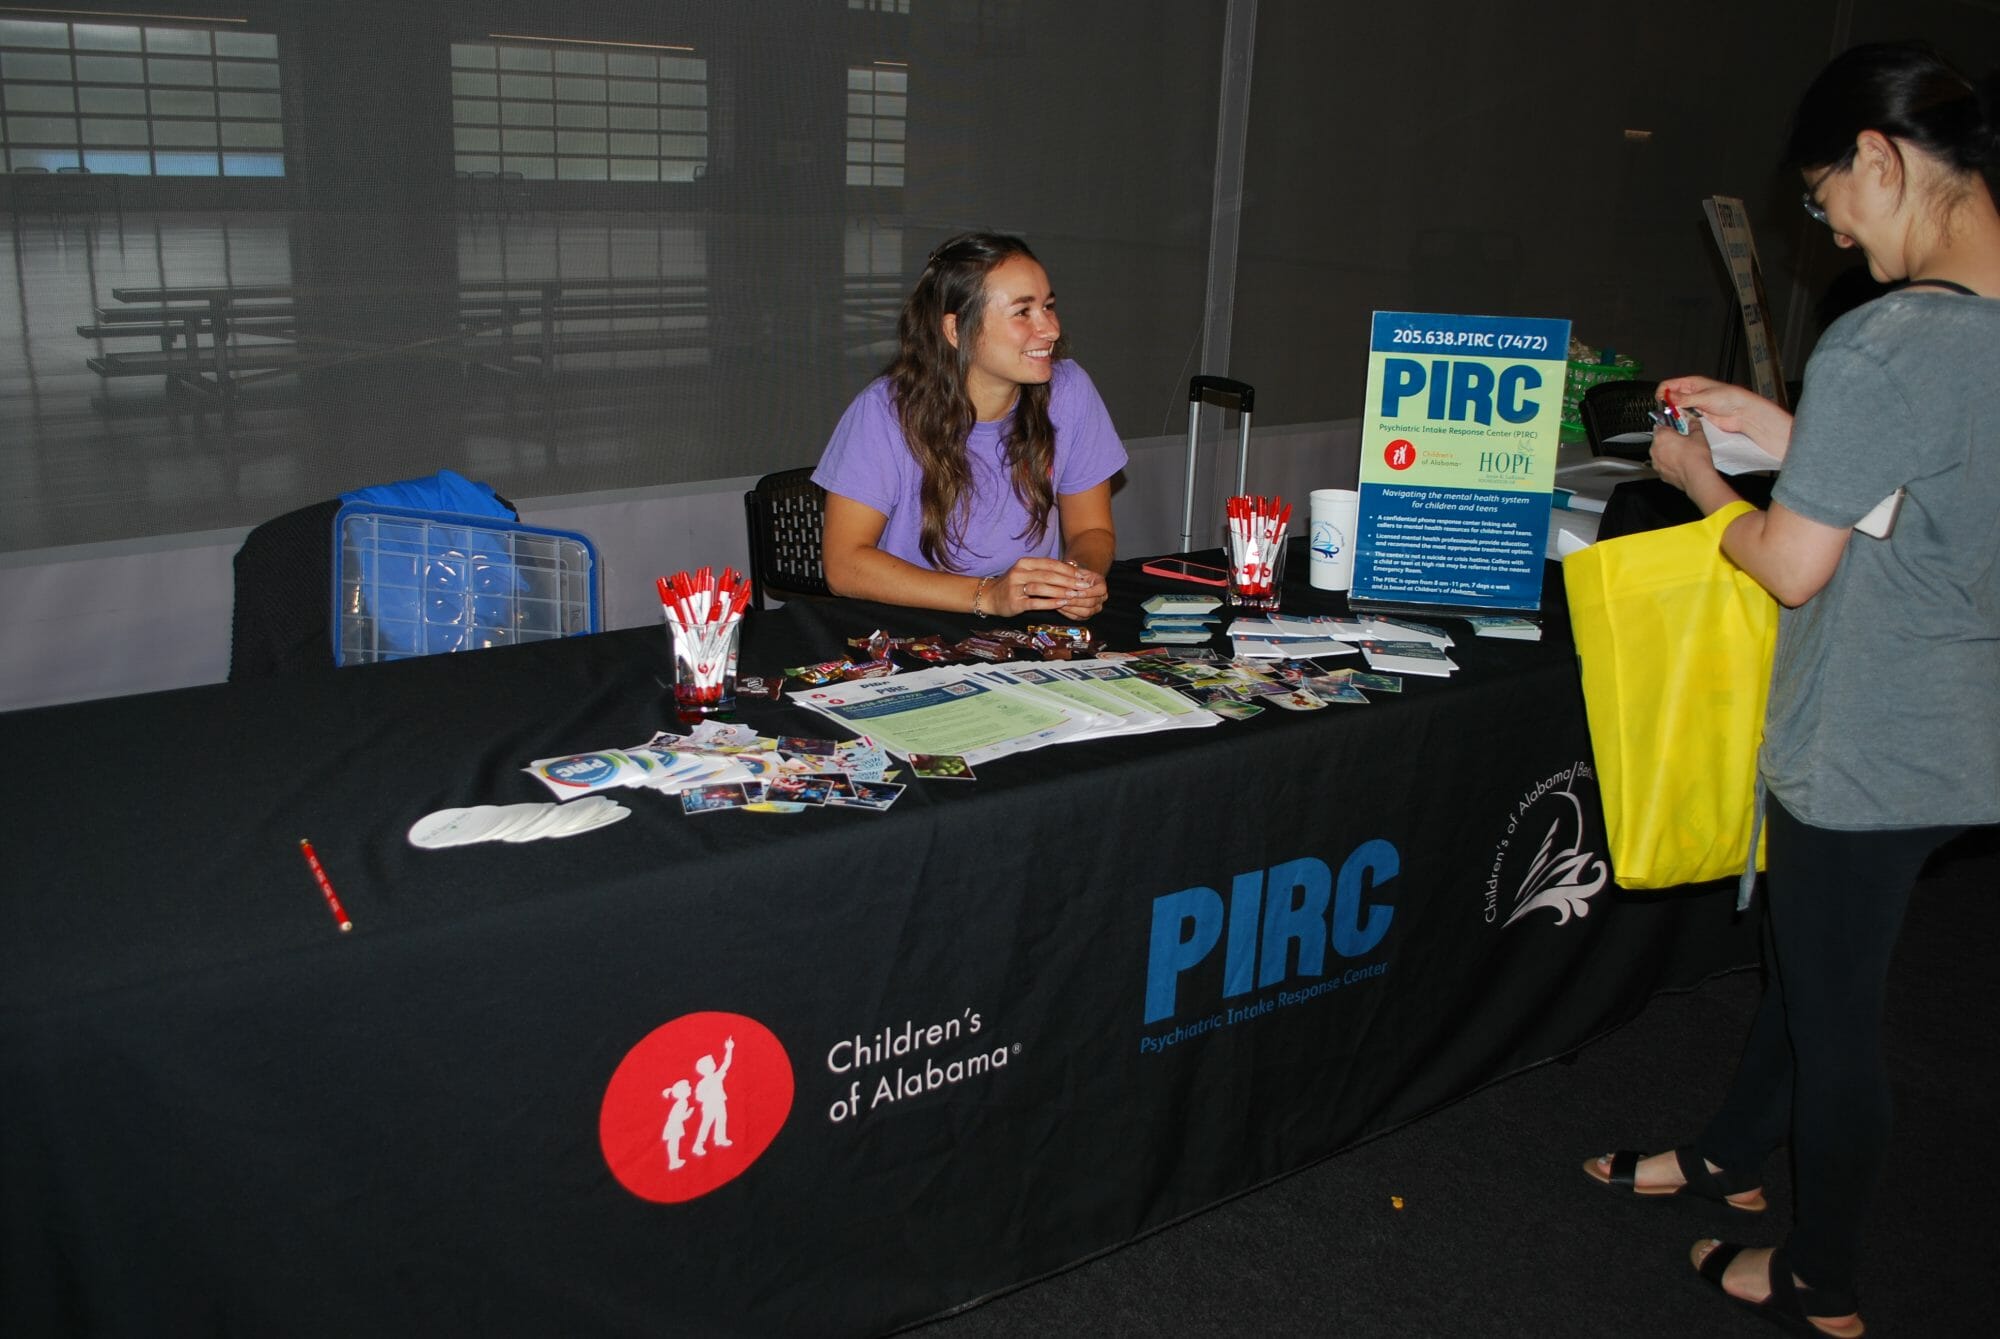 PIRC (Psychiatric Intake Response Center)